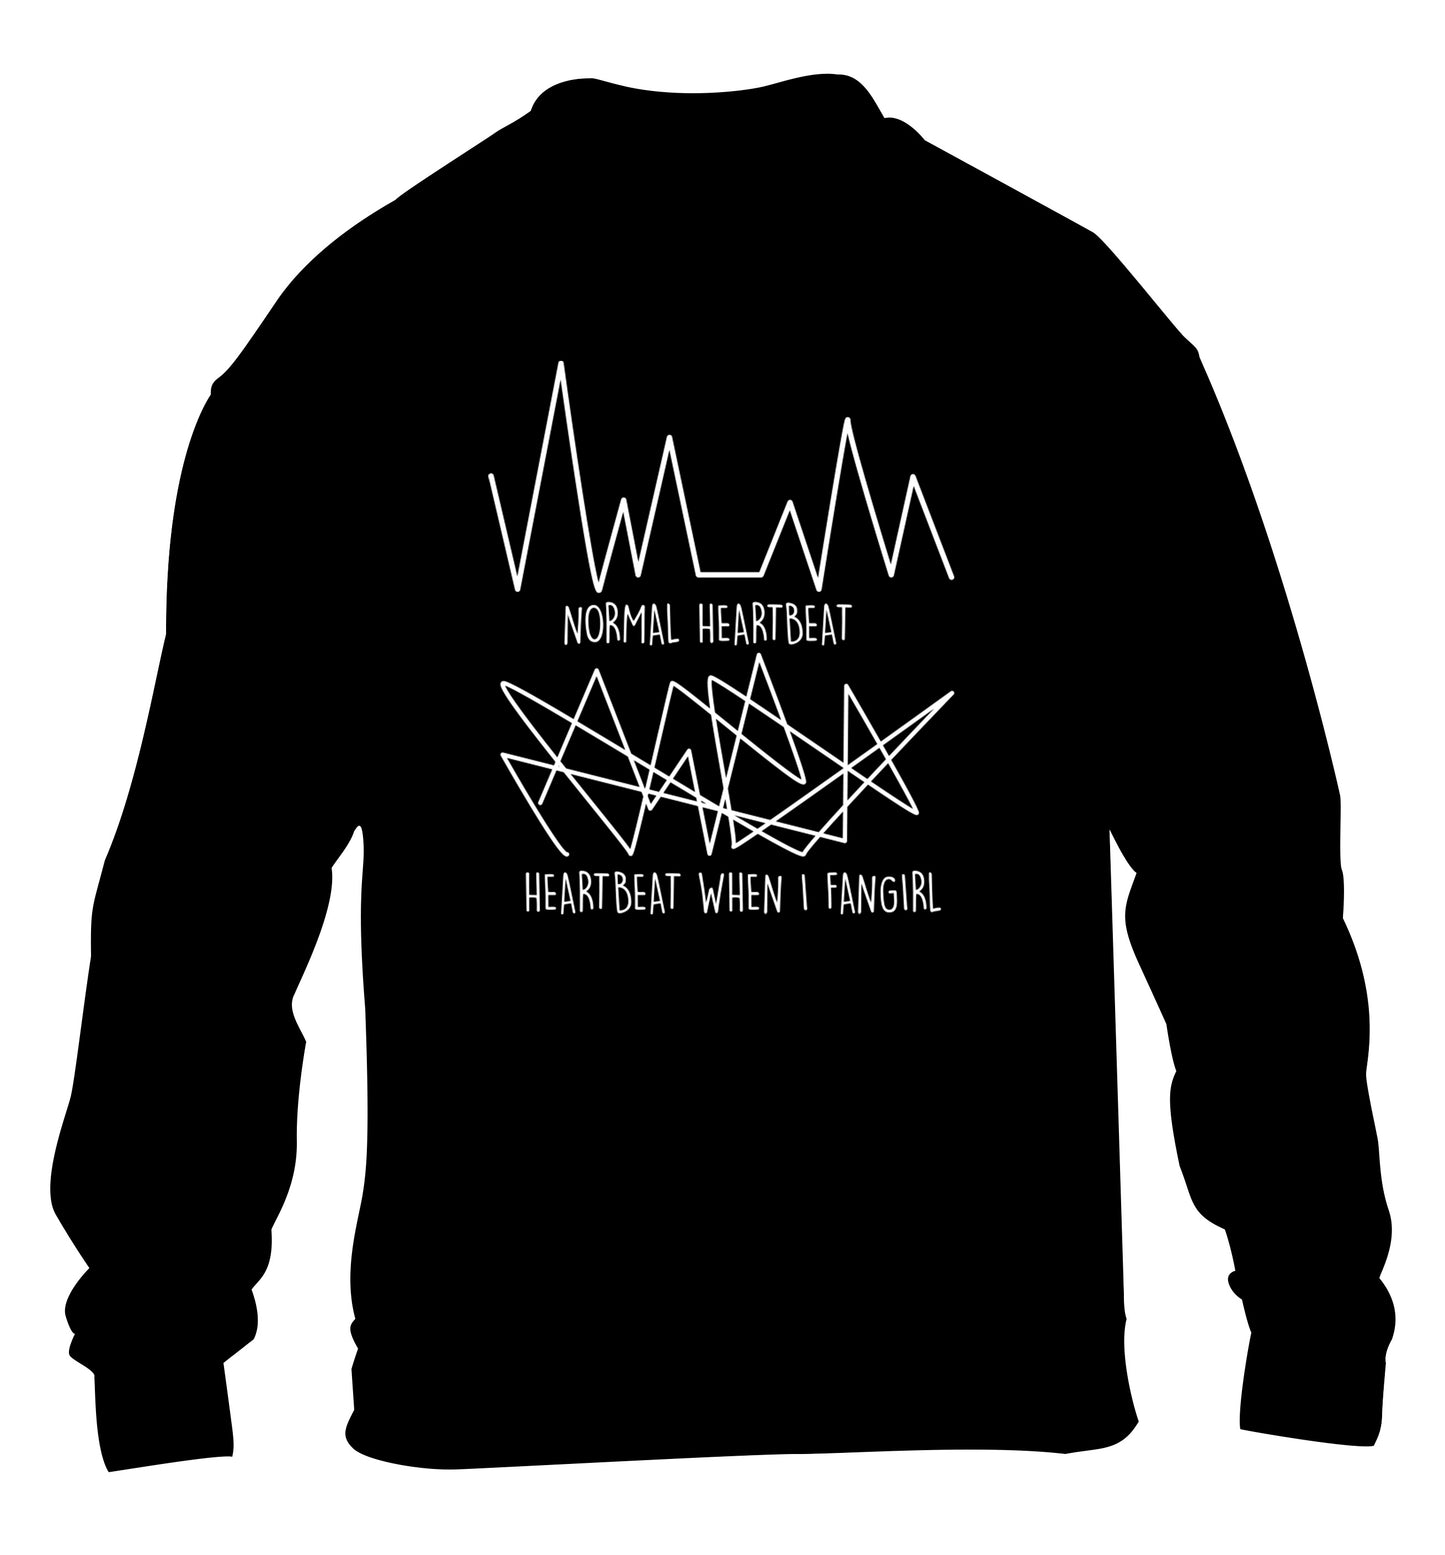 Normal heartbeat heartbeat when I fangirl children's black sweater 12-14 Years